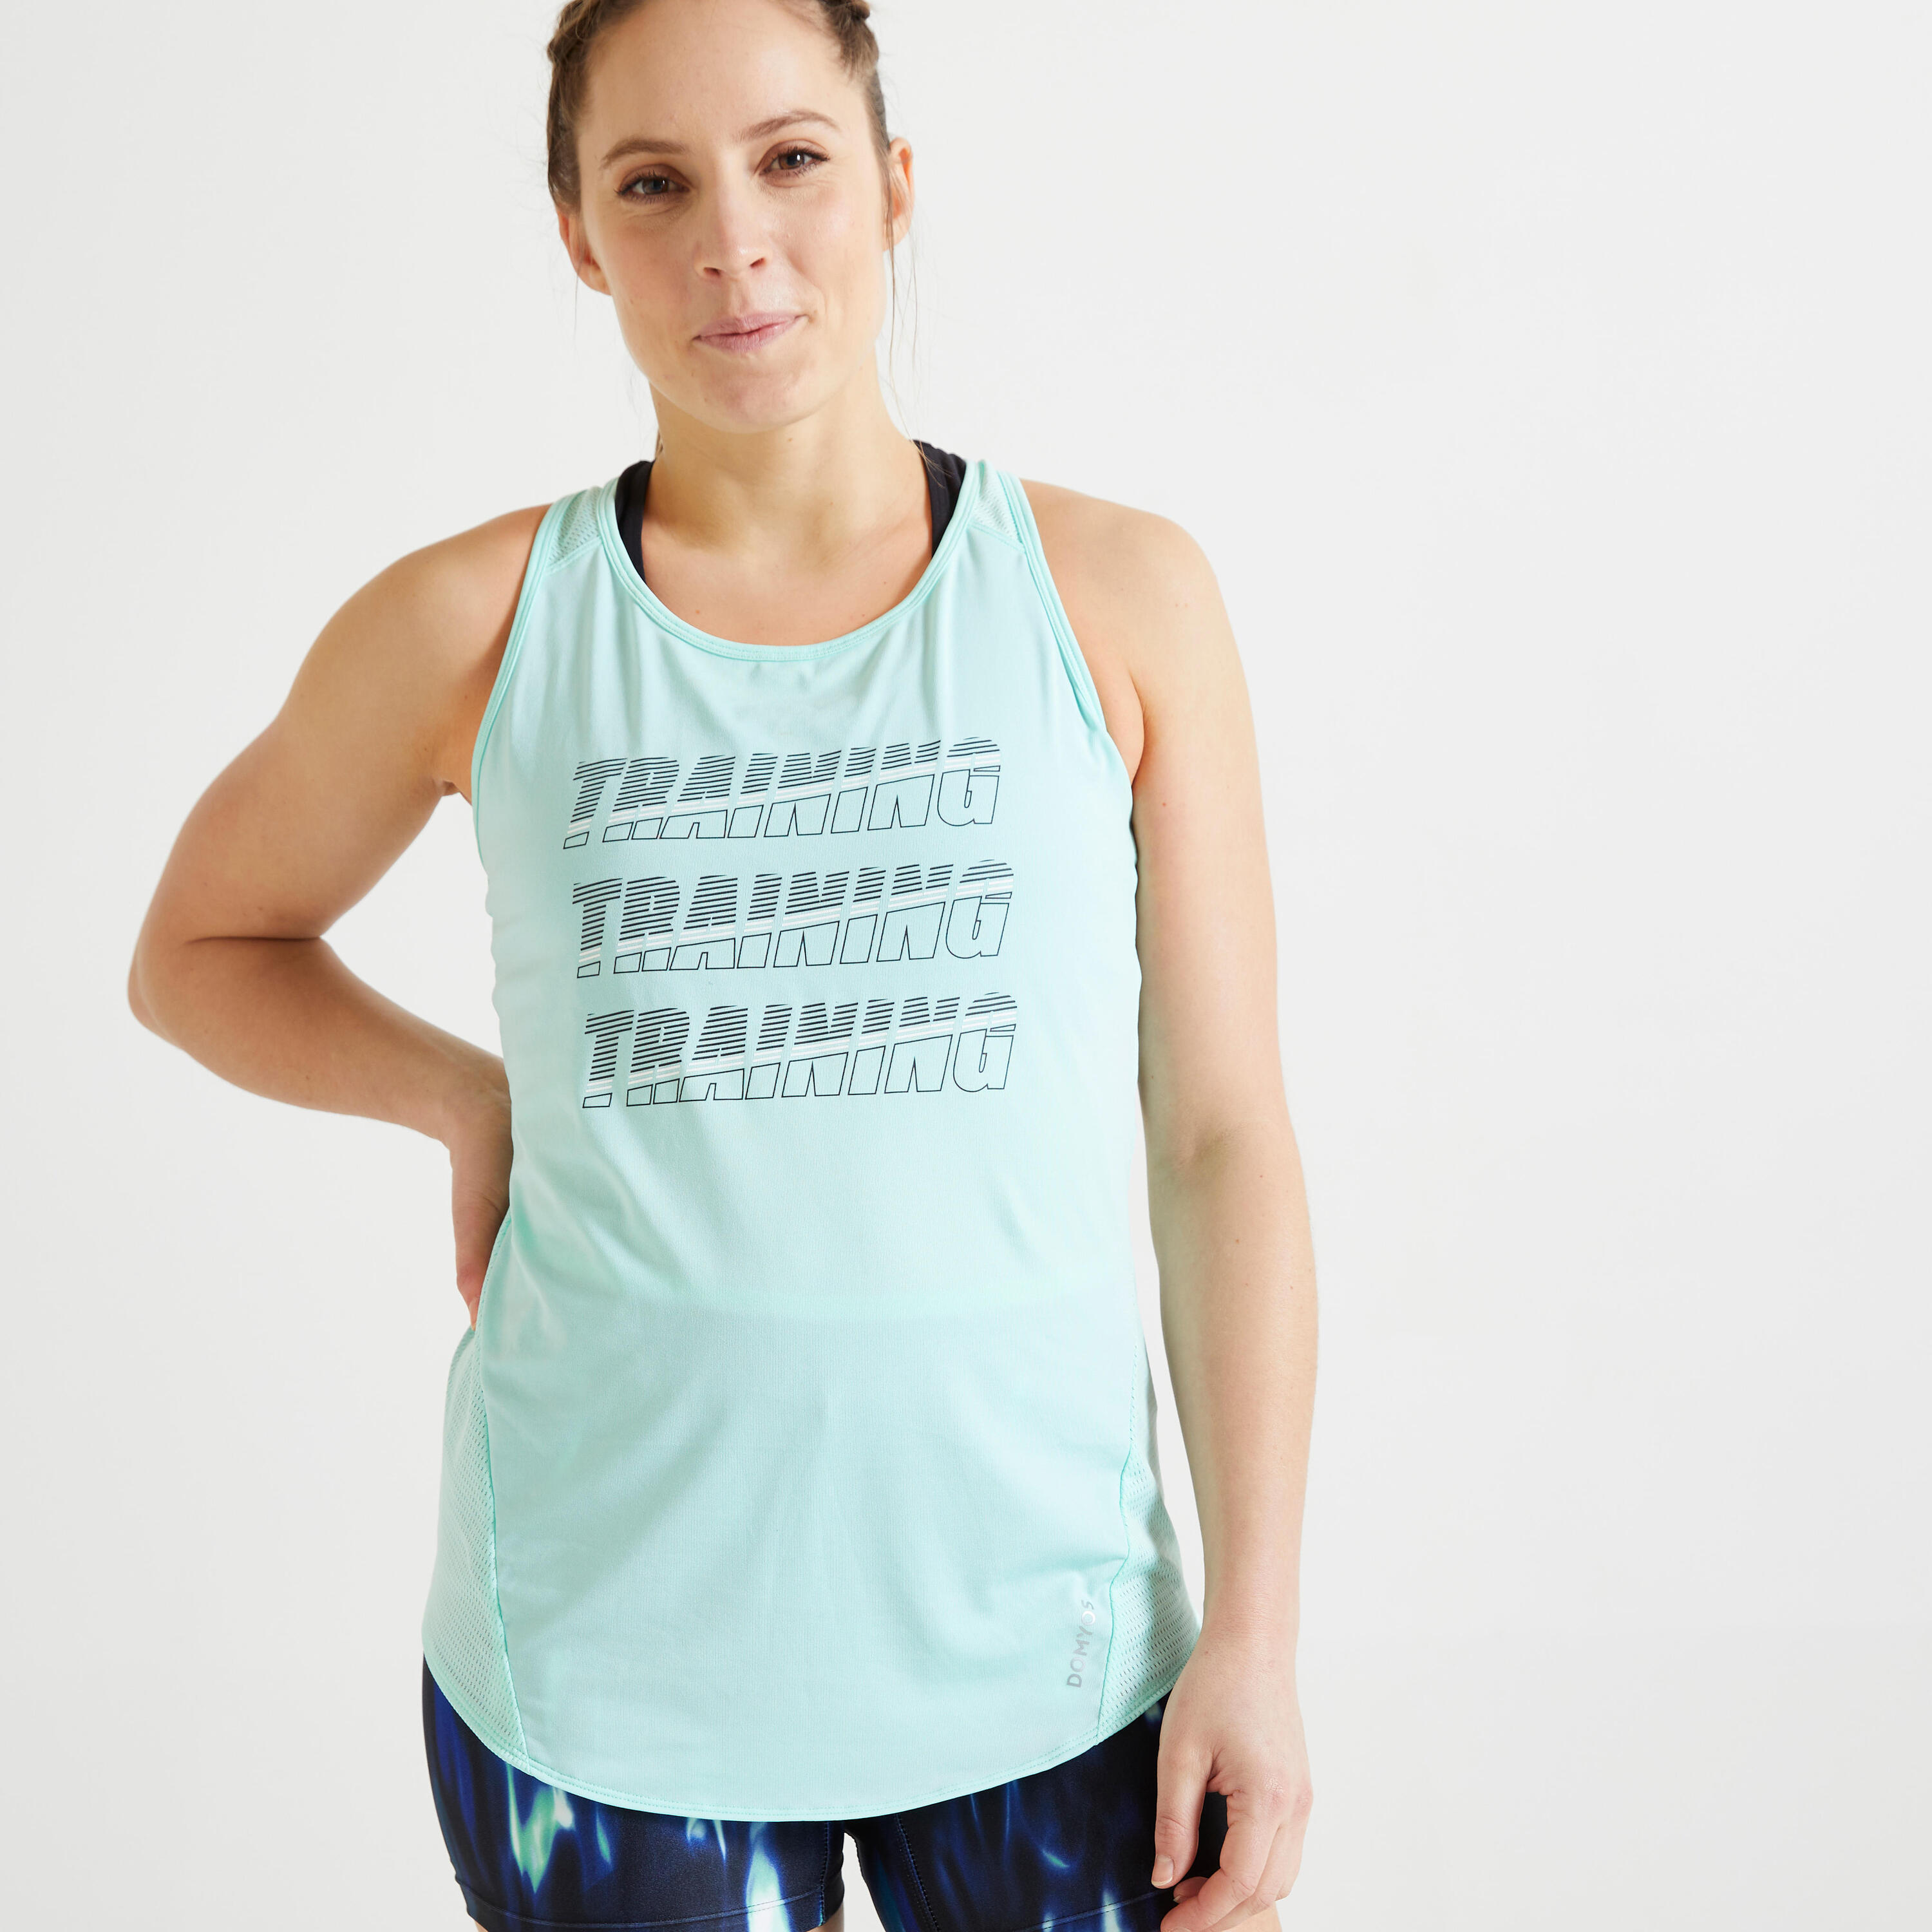 DOMYOS Women's Fitness Cardio Training Tank Top 120 - Turquoise